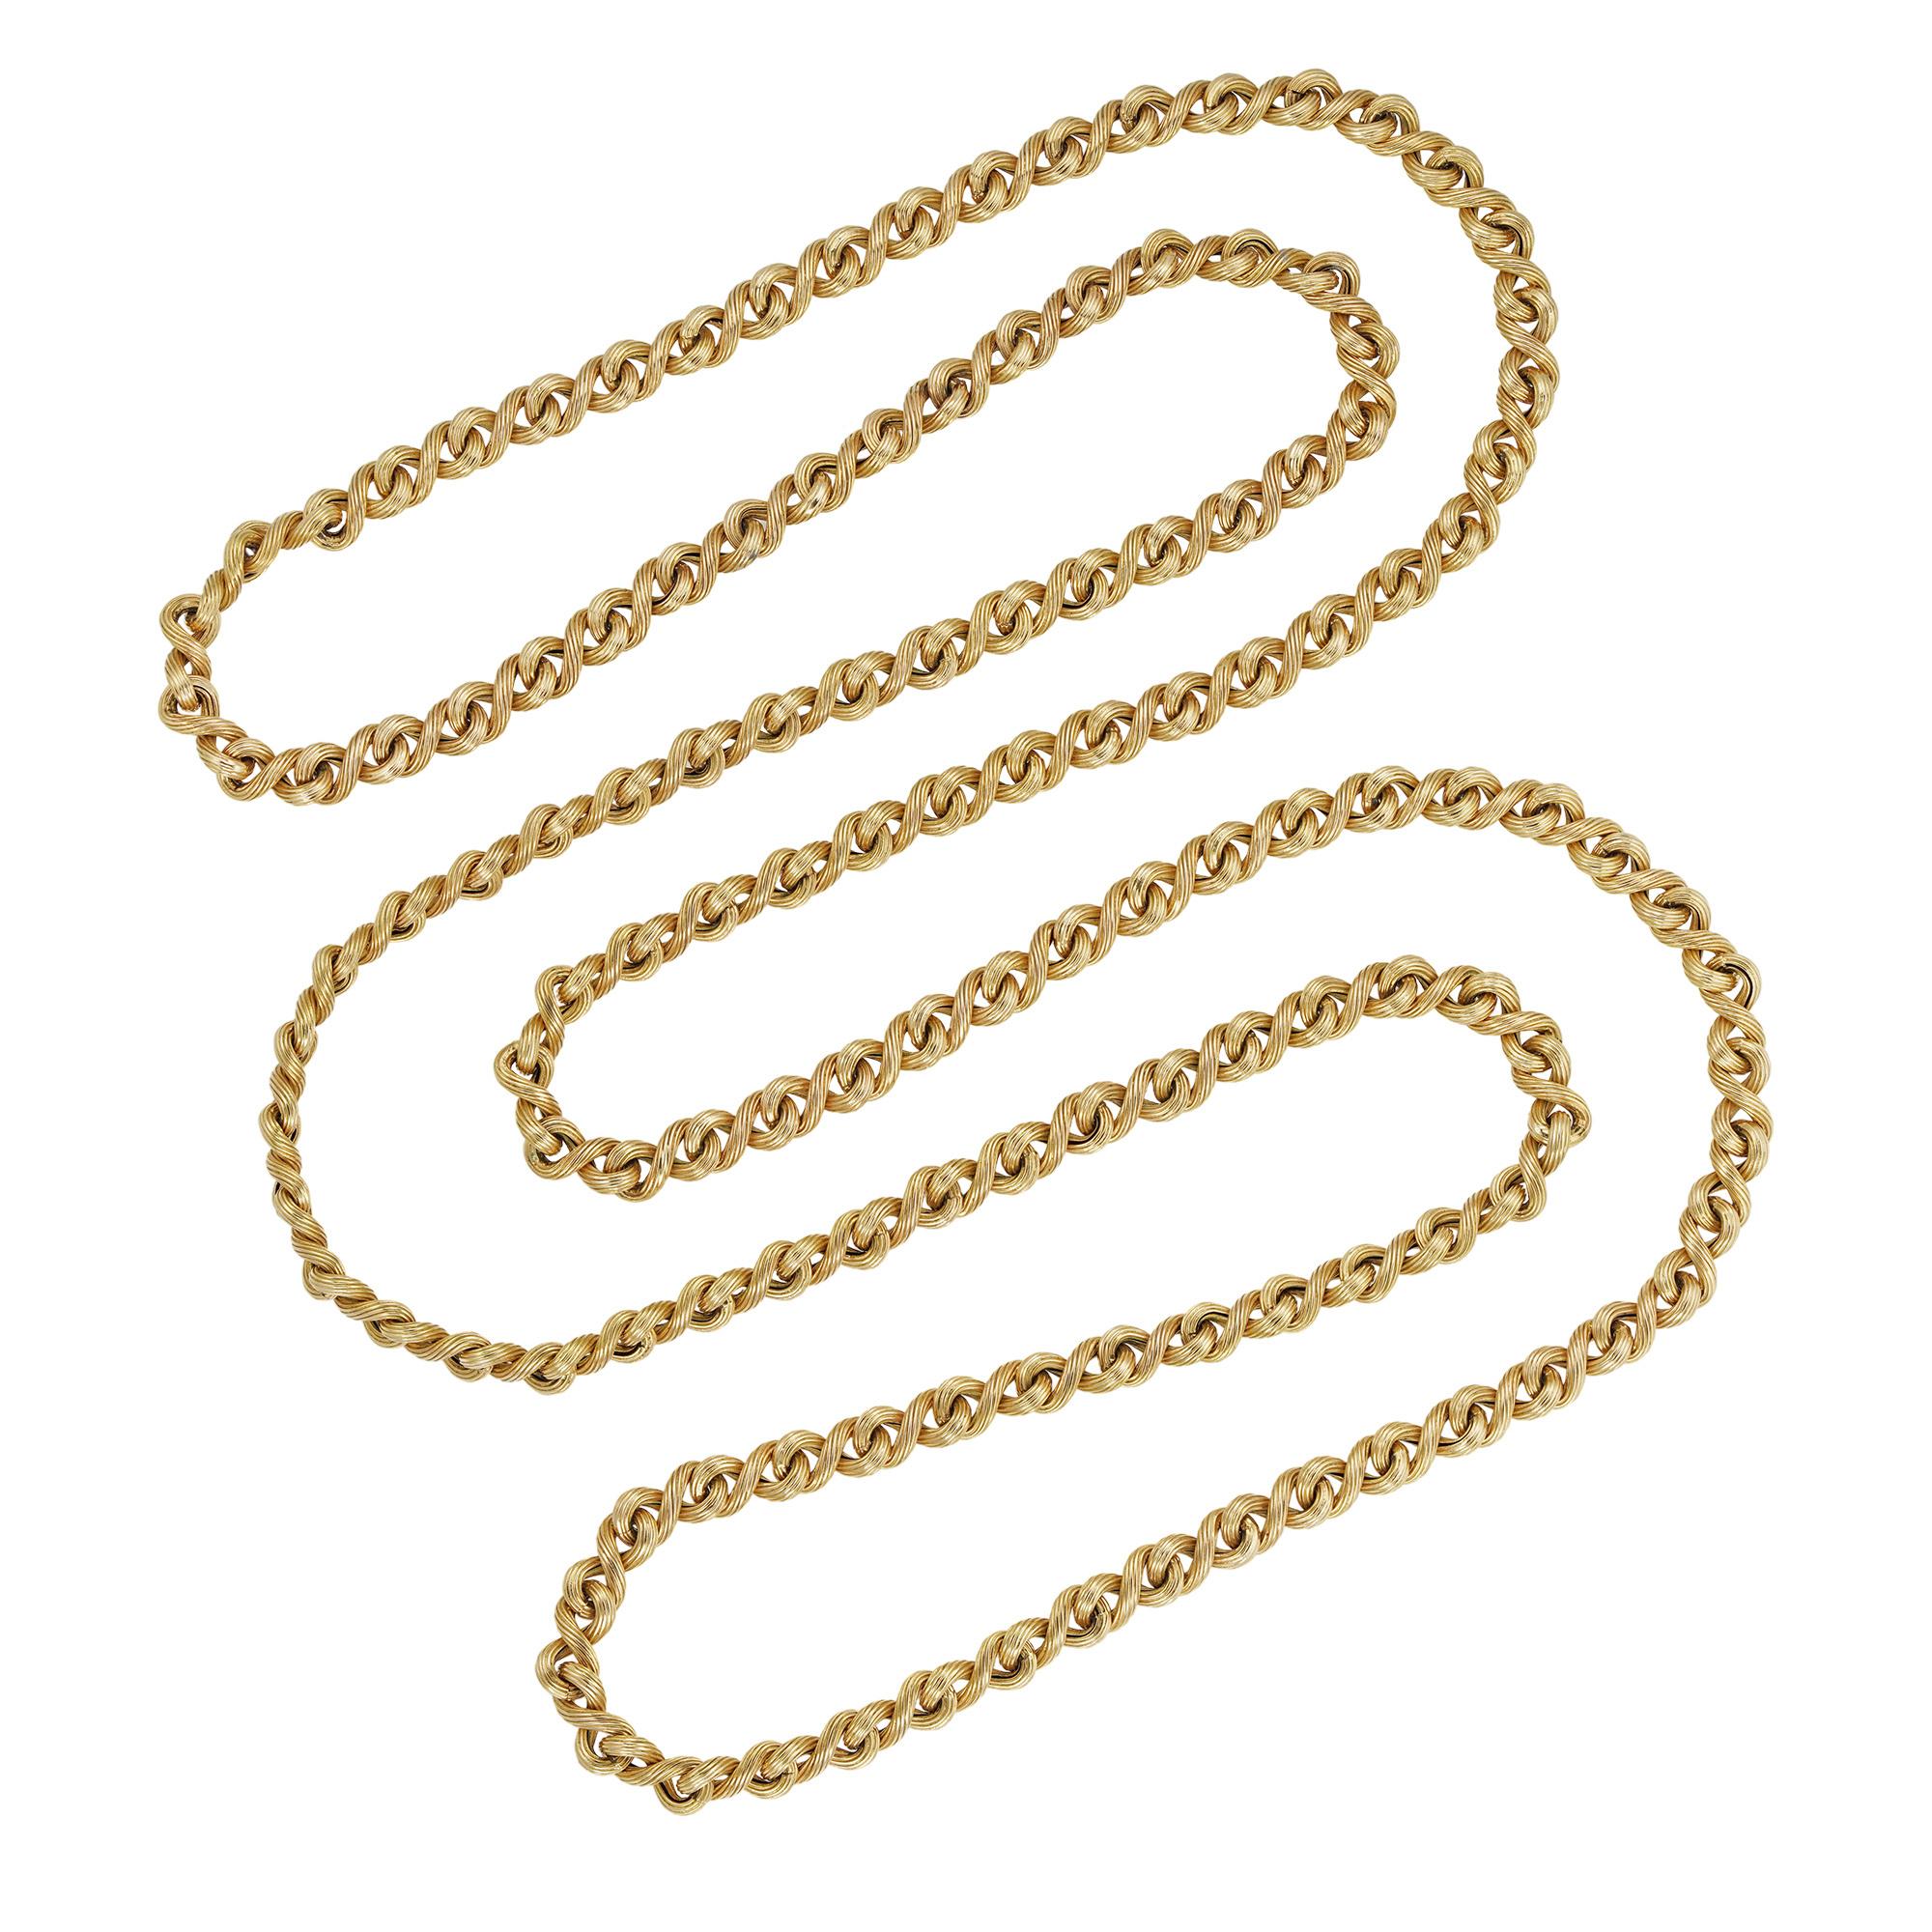 19 carat gold chain